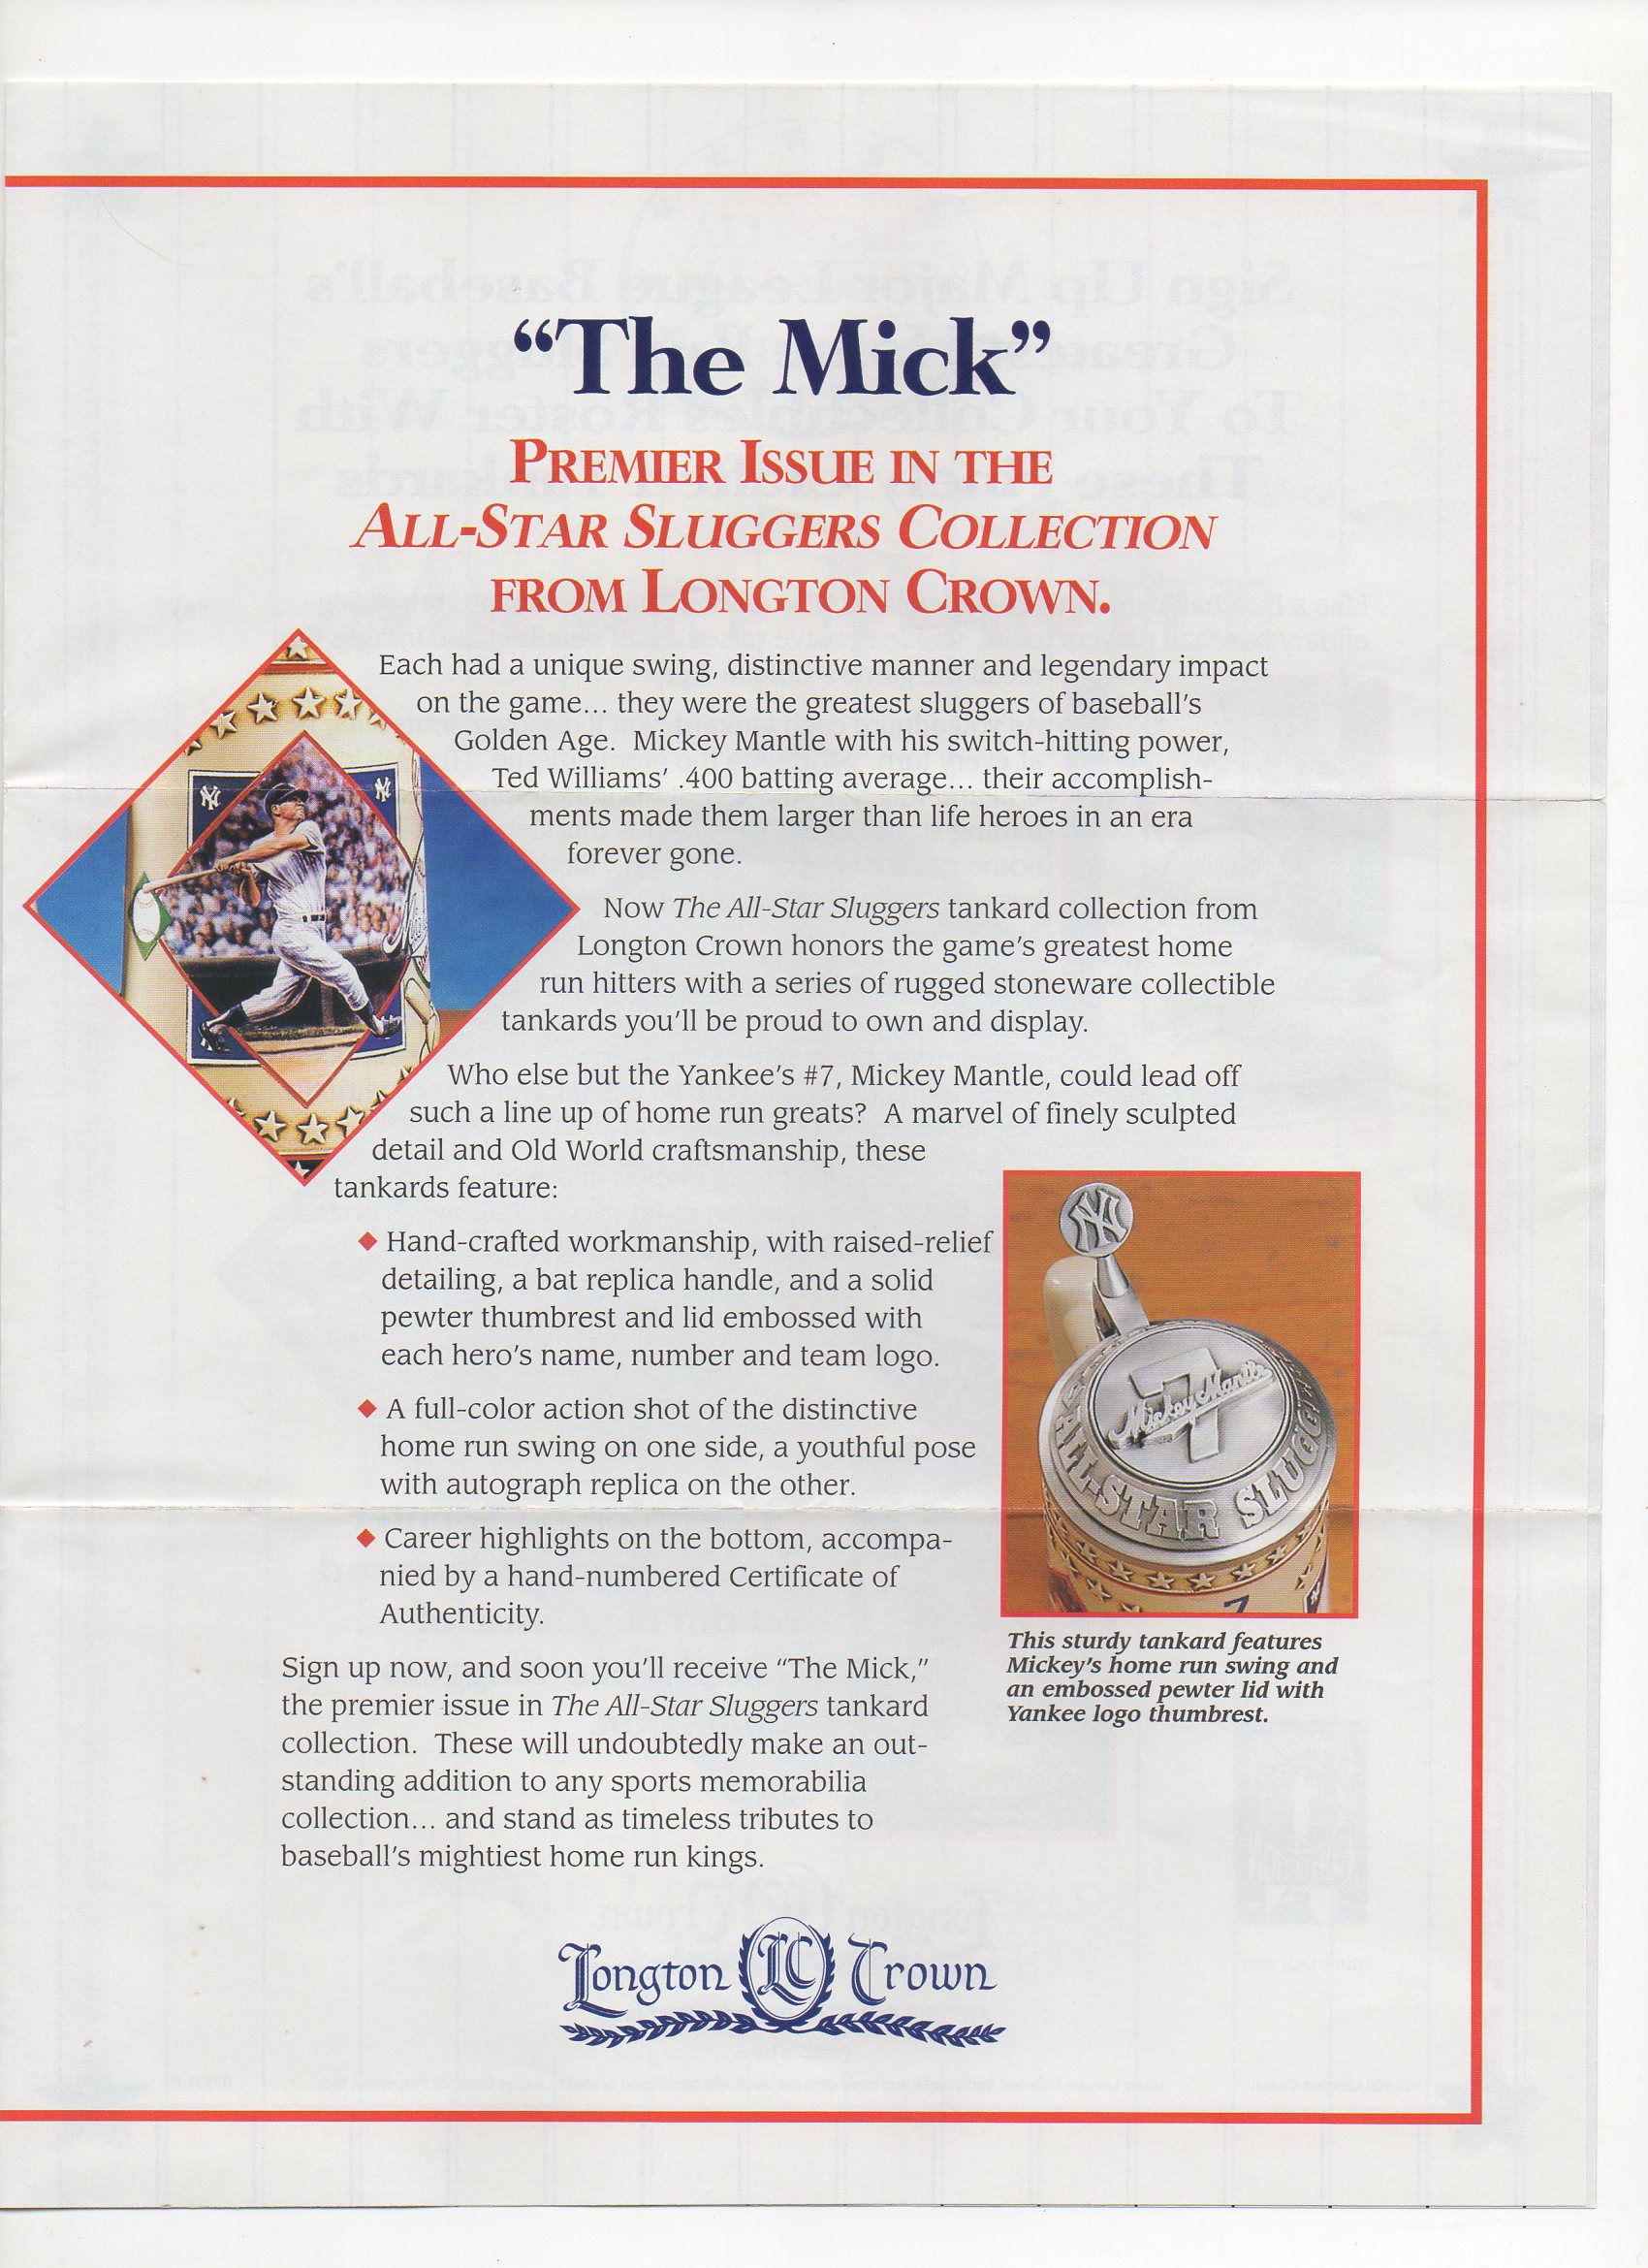 1995 longton crown 4 page slick